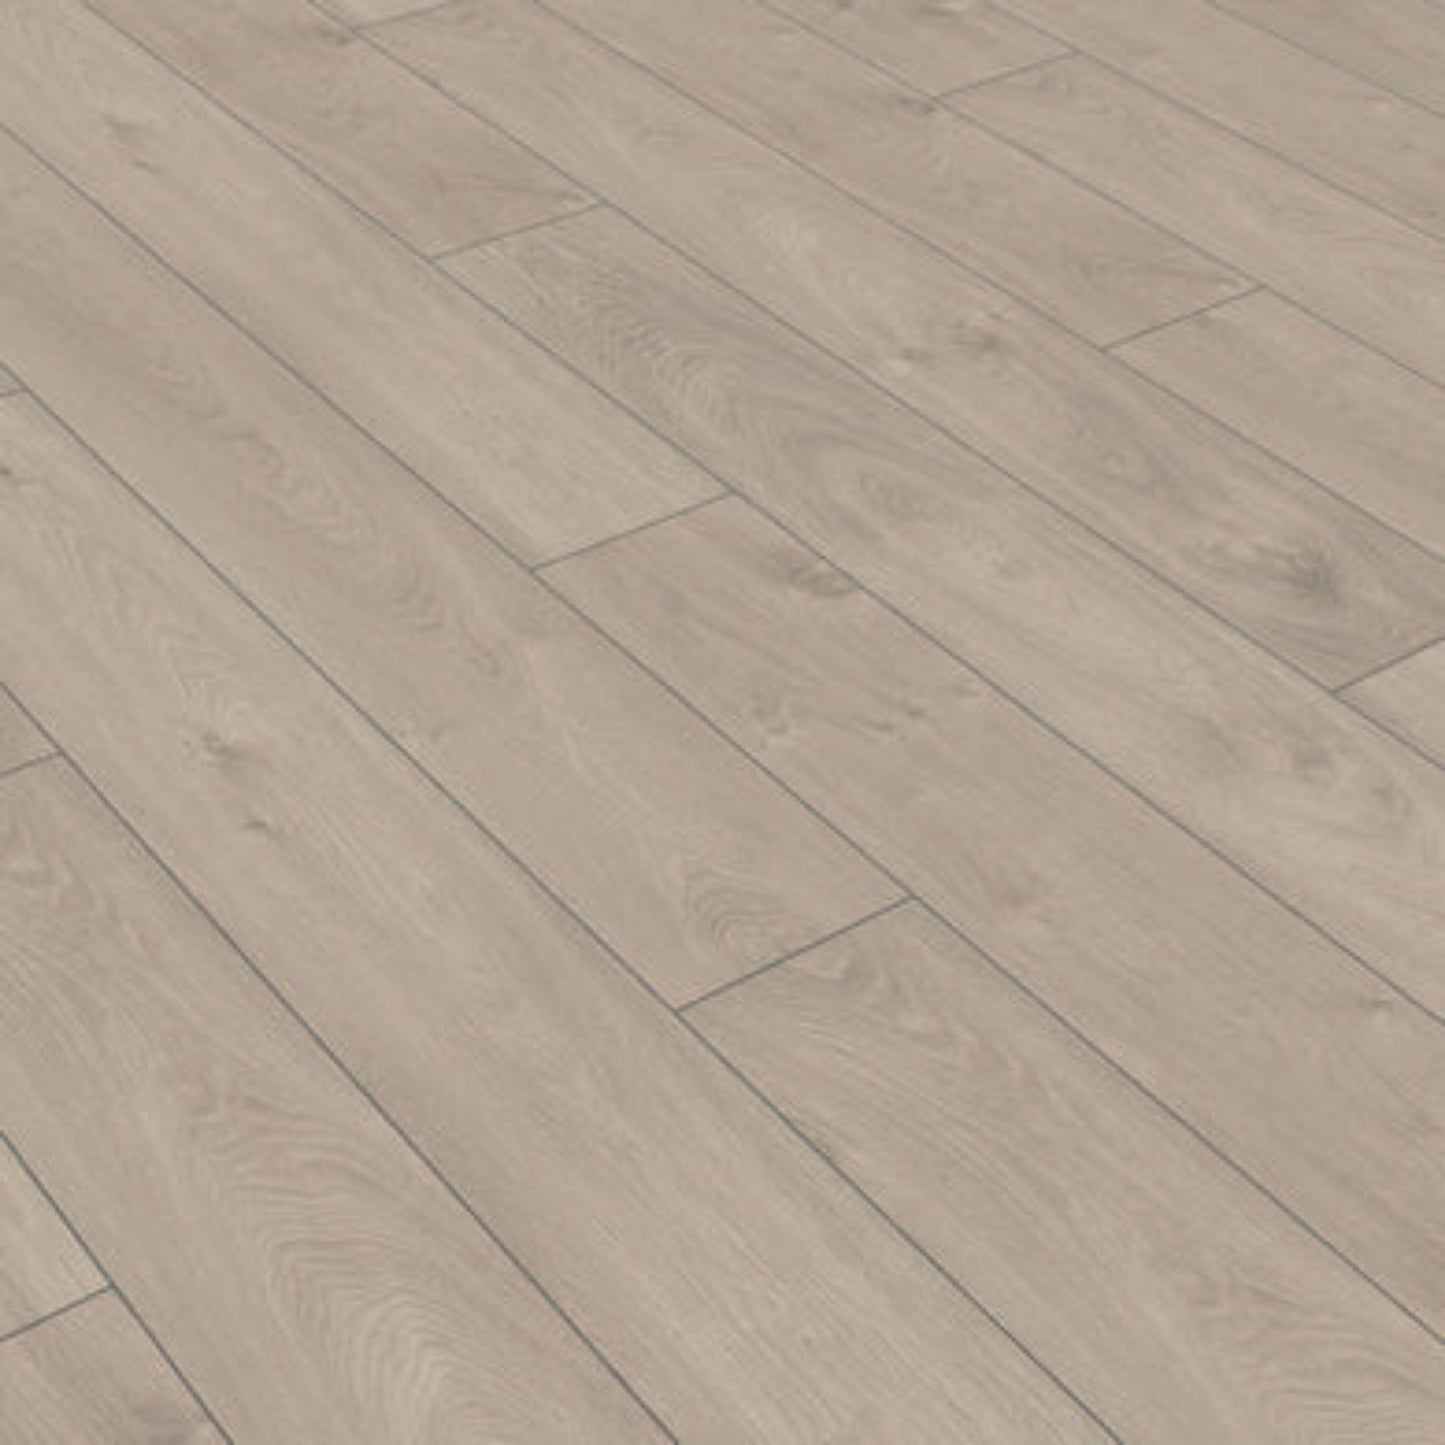 LessCare 12mm Engleberg Eiche Textured Finish Laminate Flooring Kronoswiss